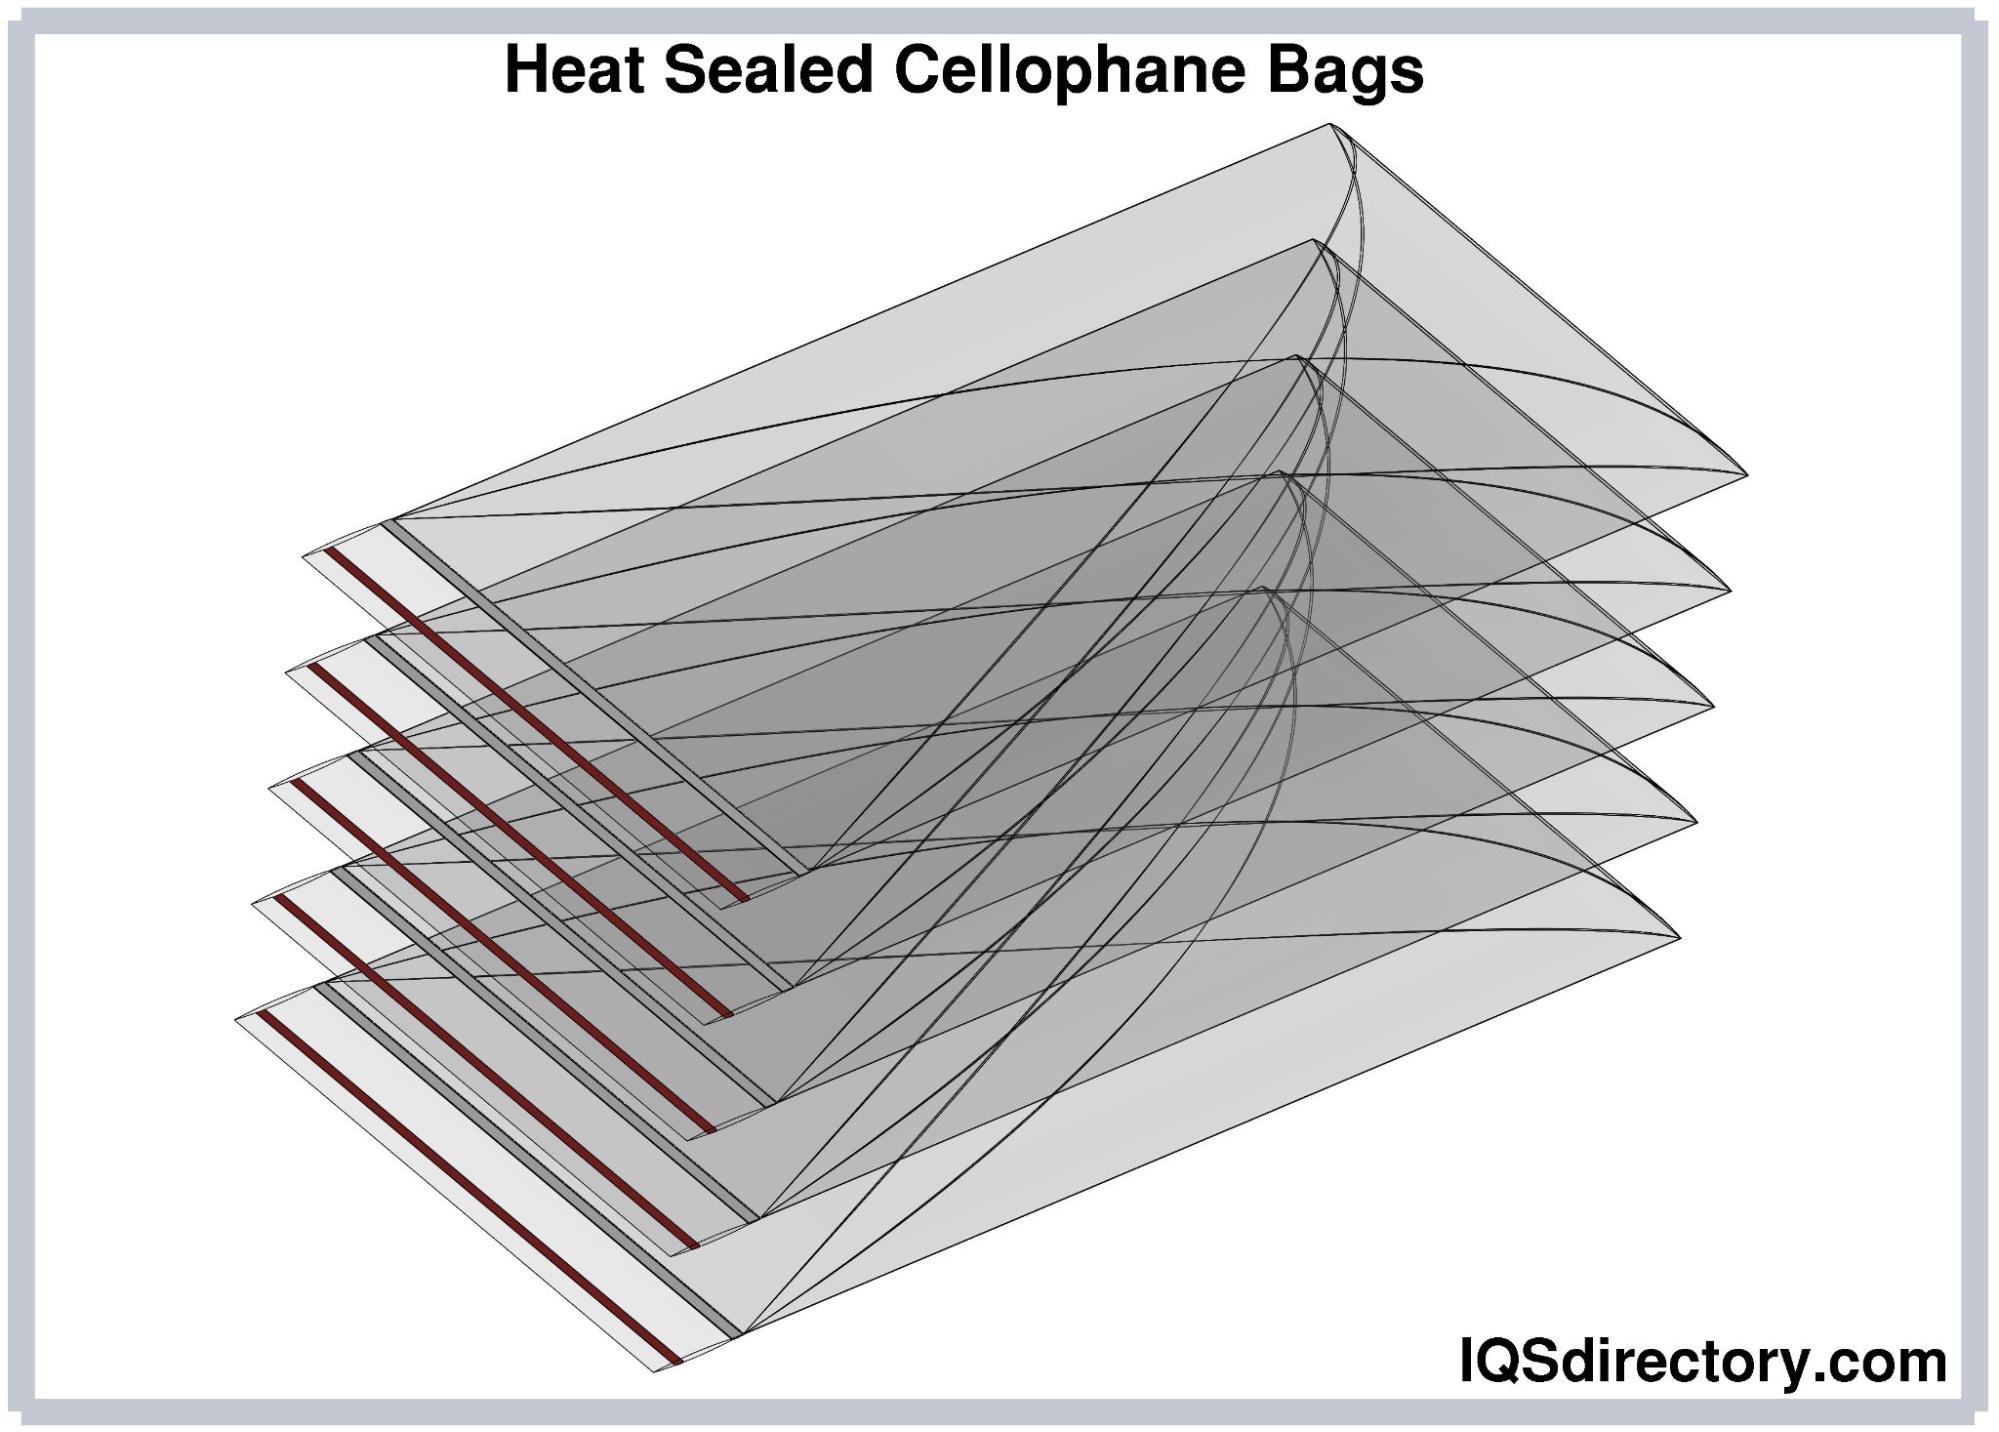 Heat-Seal Evidence Bags